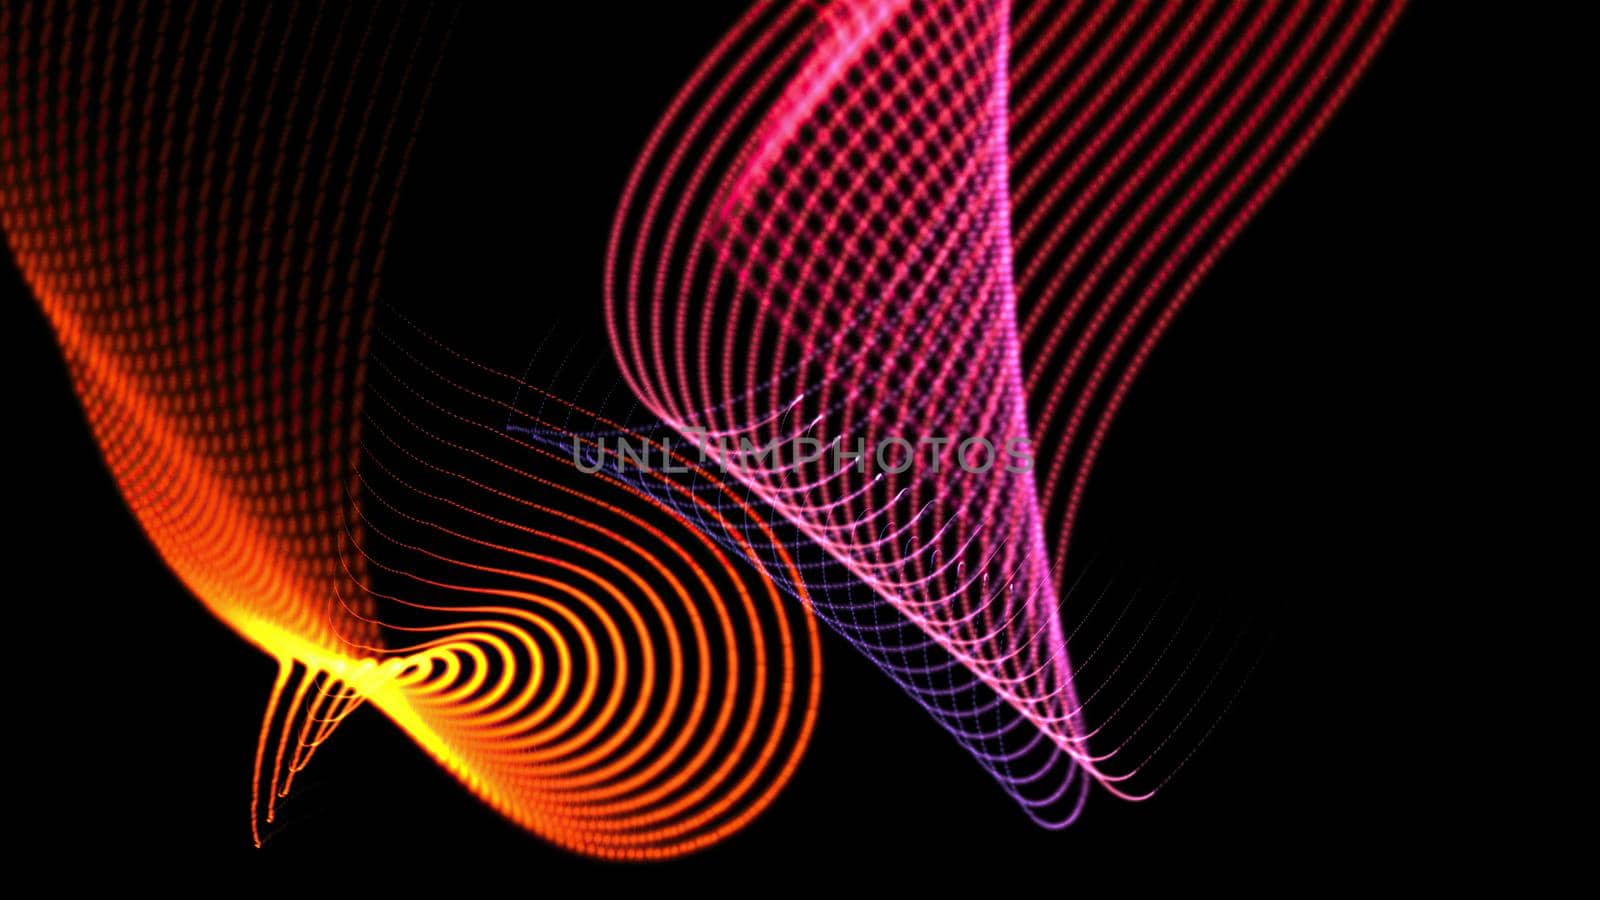 3d illustration - Hypnotic grid of lines creates geometric patterns. Computer graphics by vitanovski